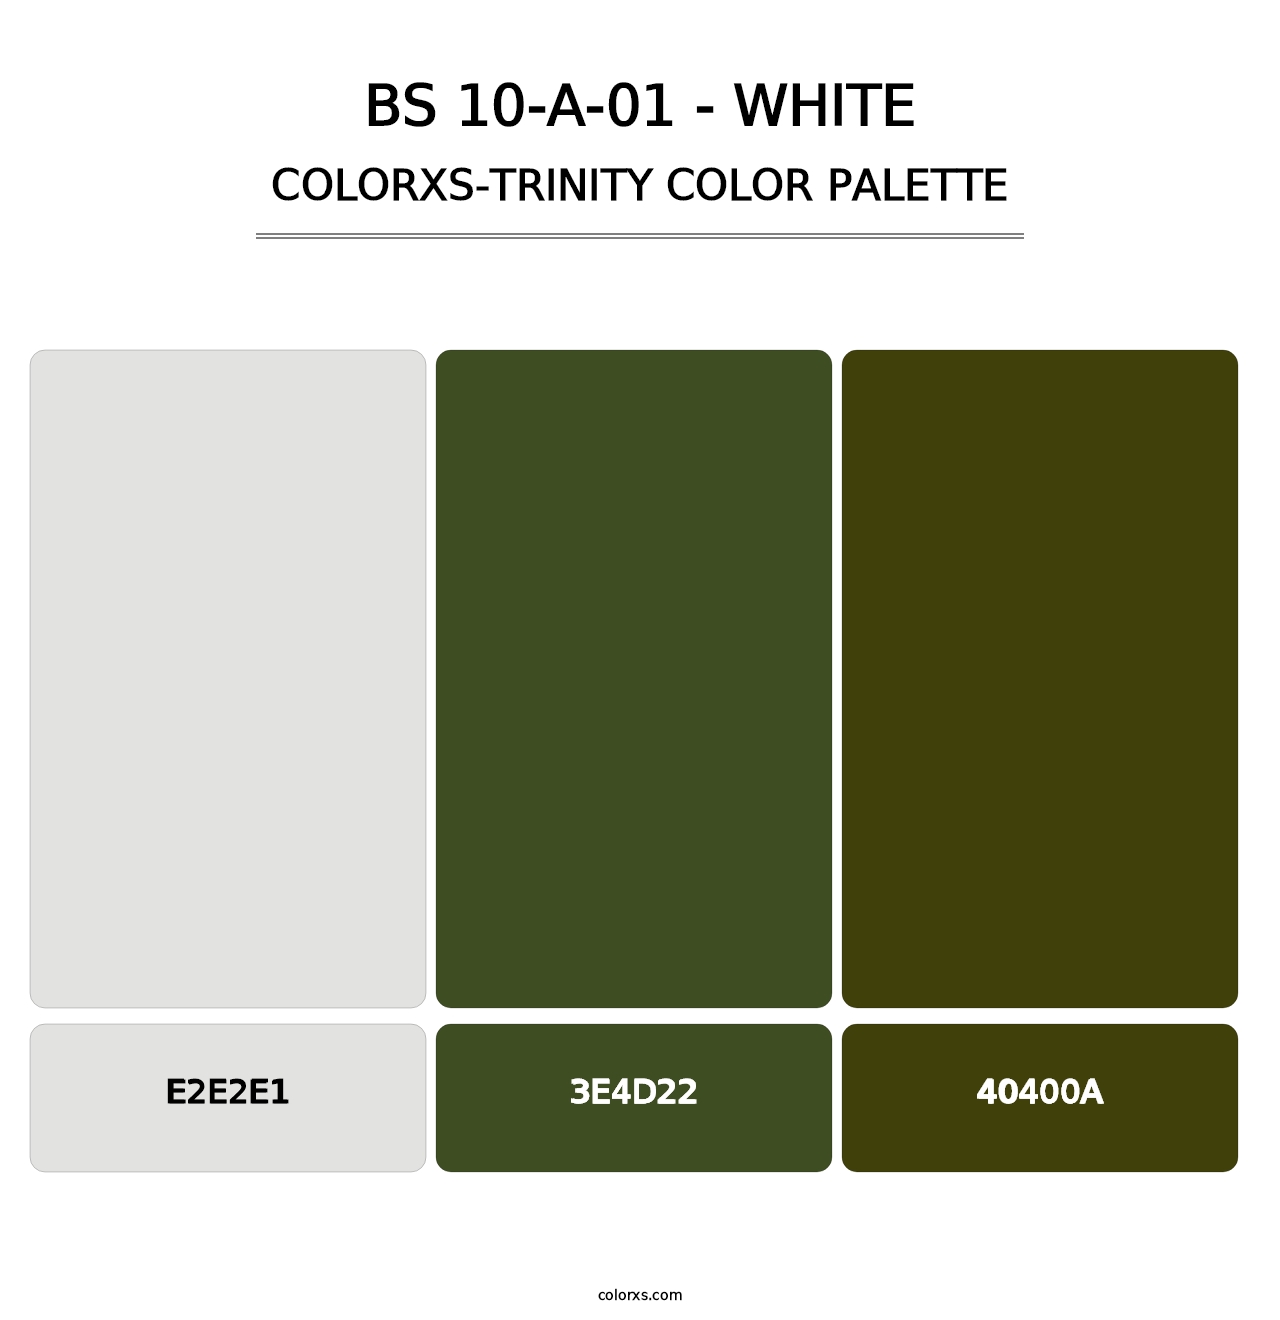 BS 10-A-01 - White - Colorxs Trinity Palette